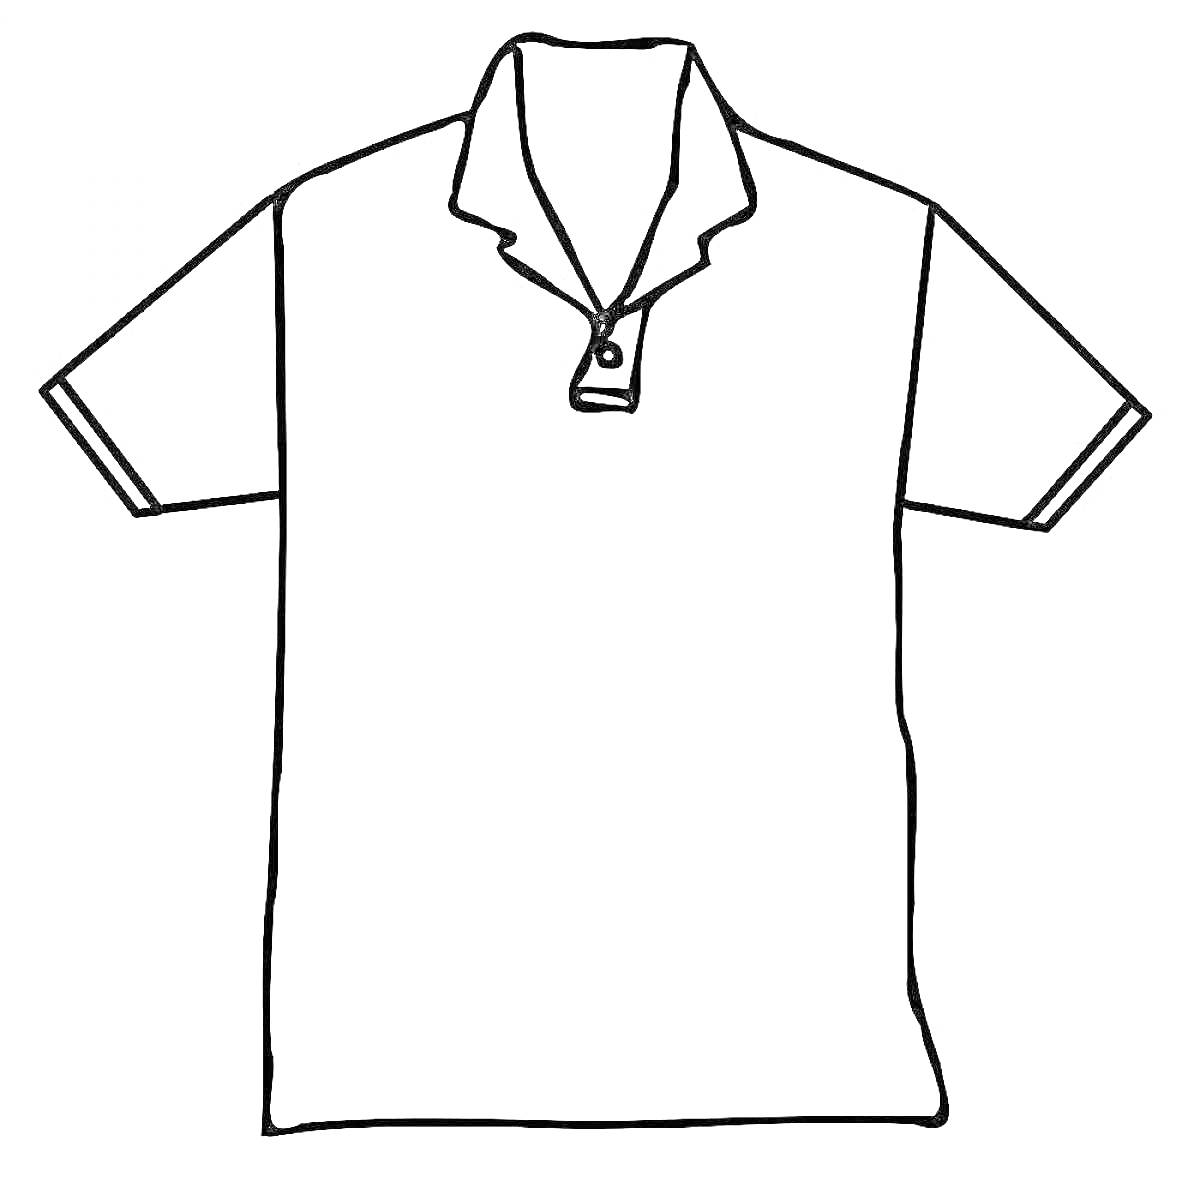 На раскраске изображено: Рубашка, Одежда, Короткие рукава, Воротник, Пуговицы